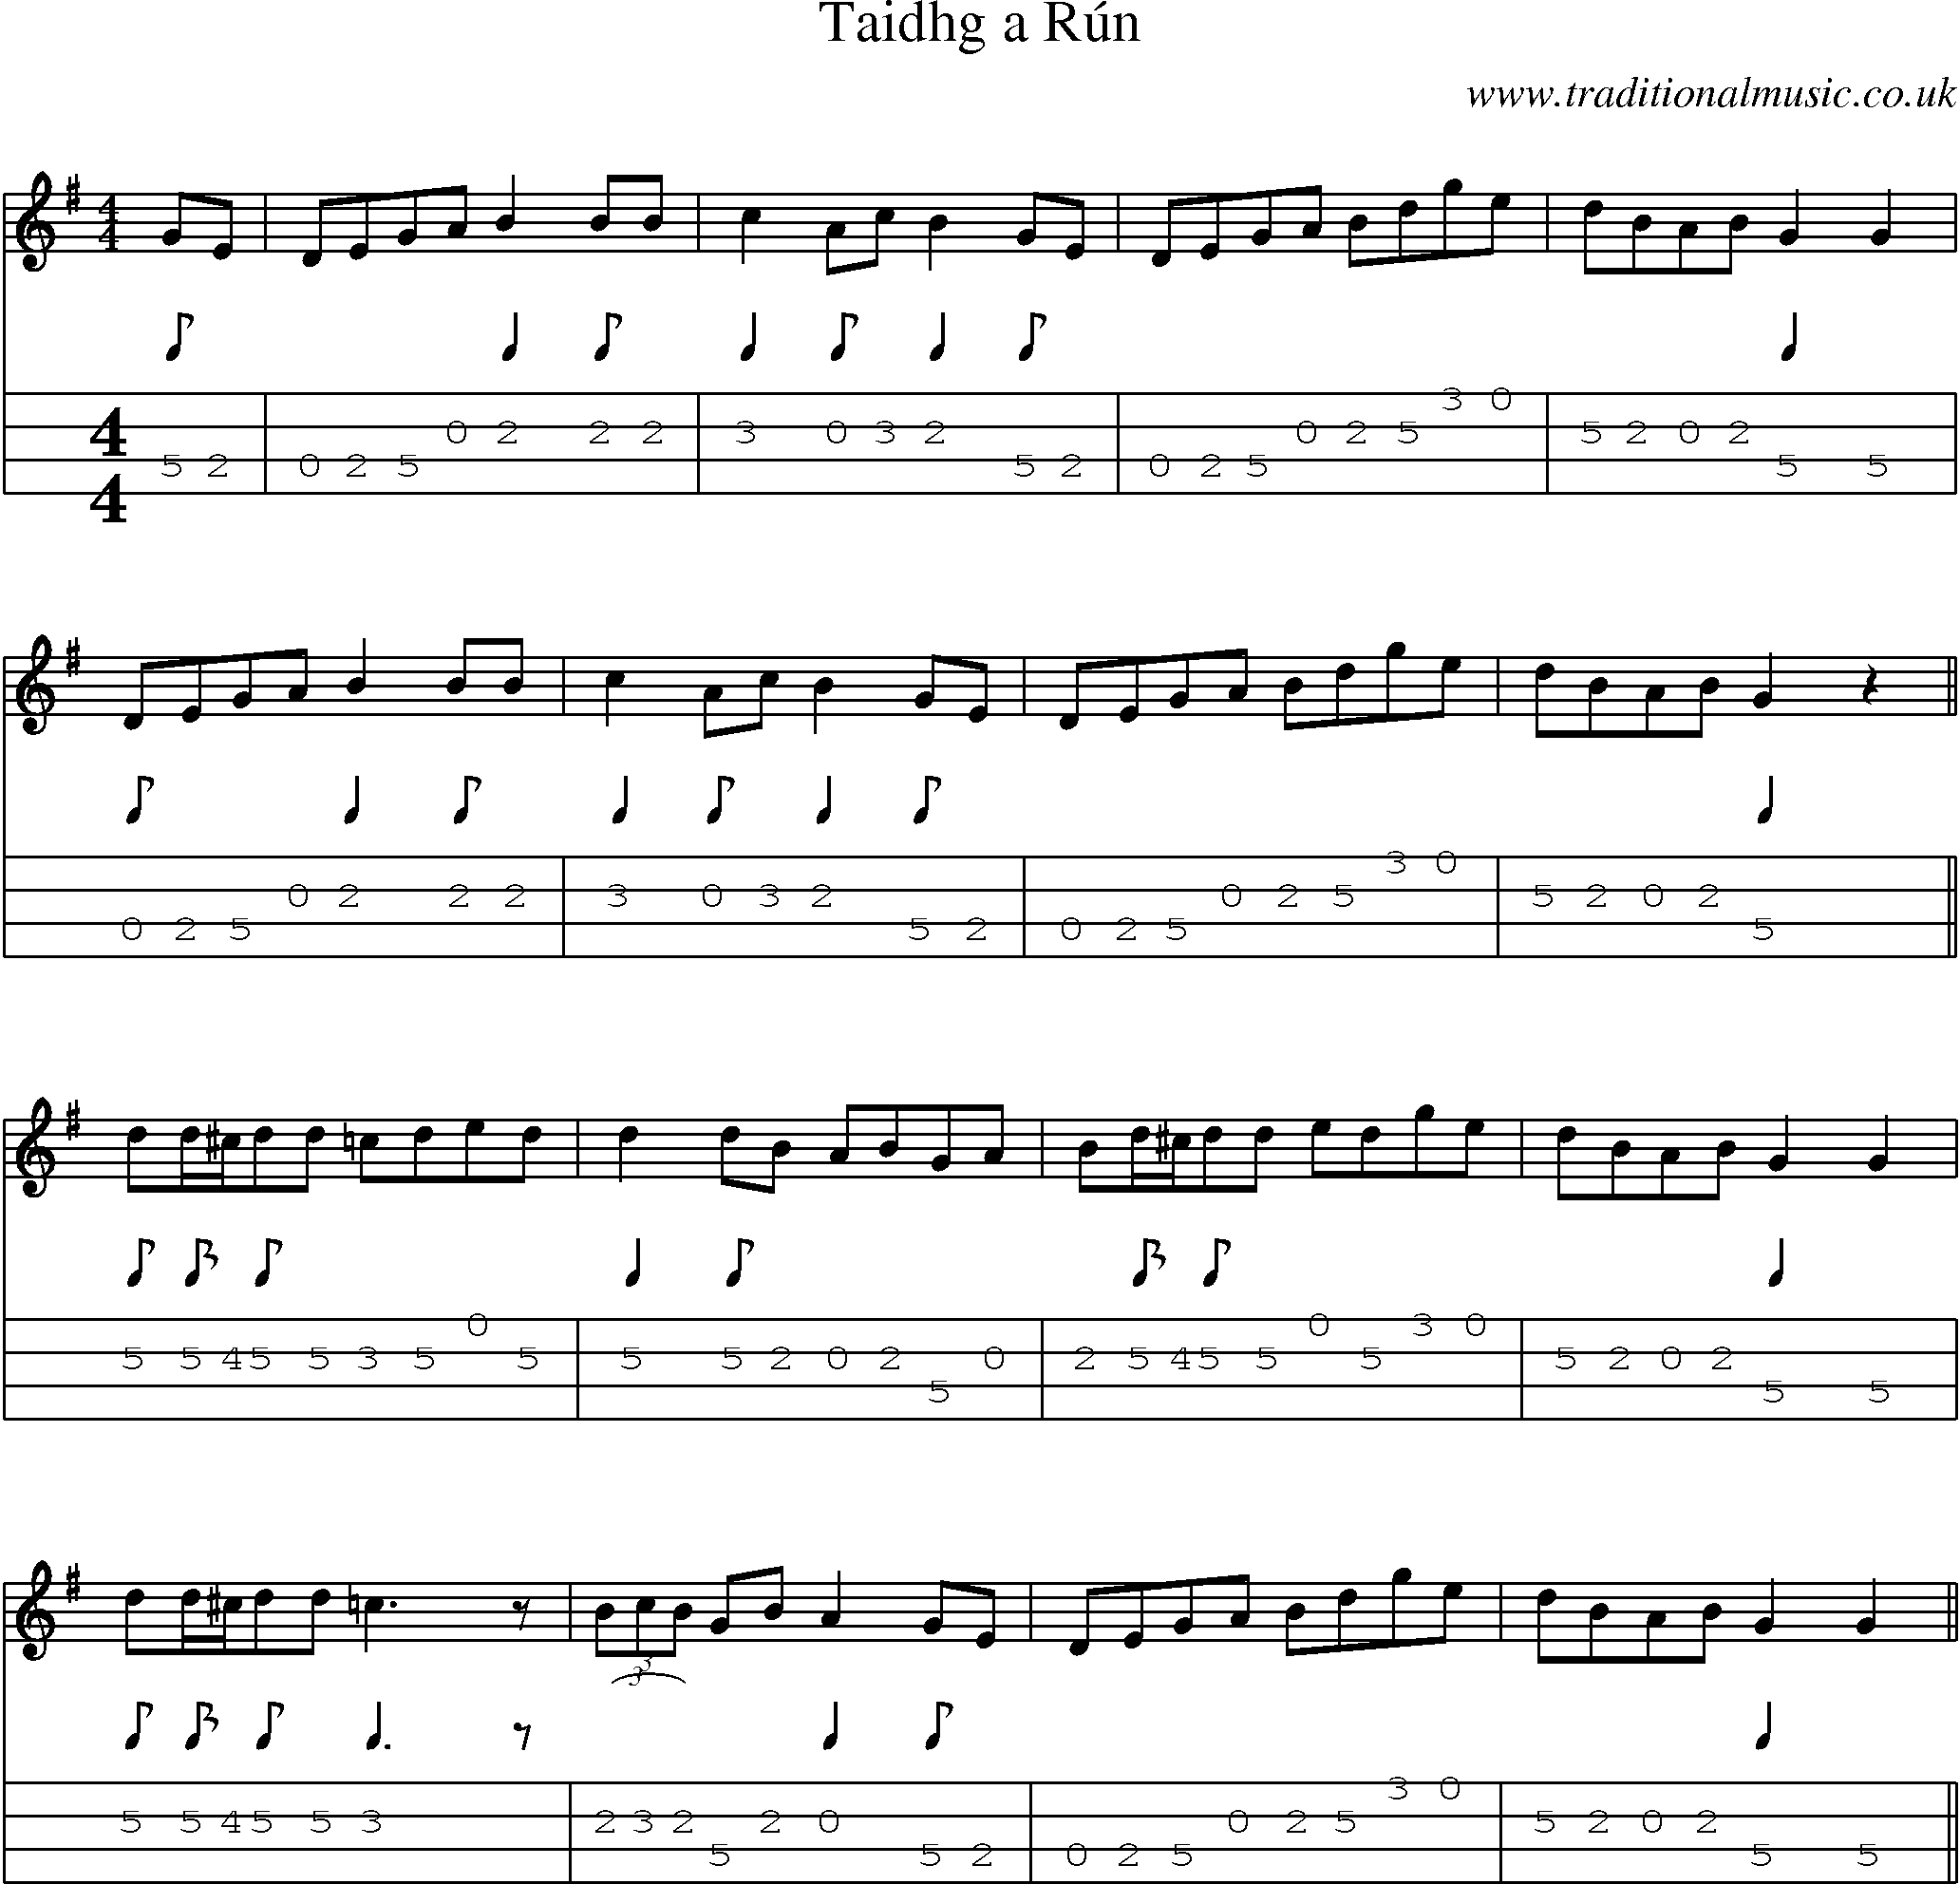 Music Score and Mandolin Tabs for Taidhg A Run